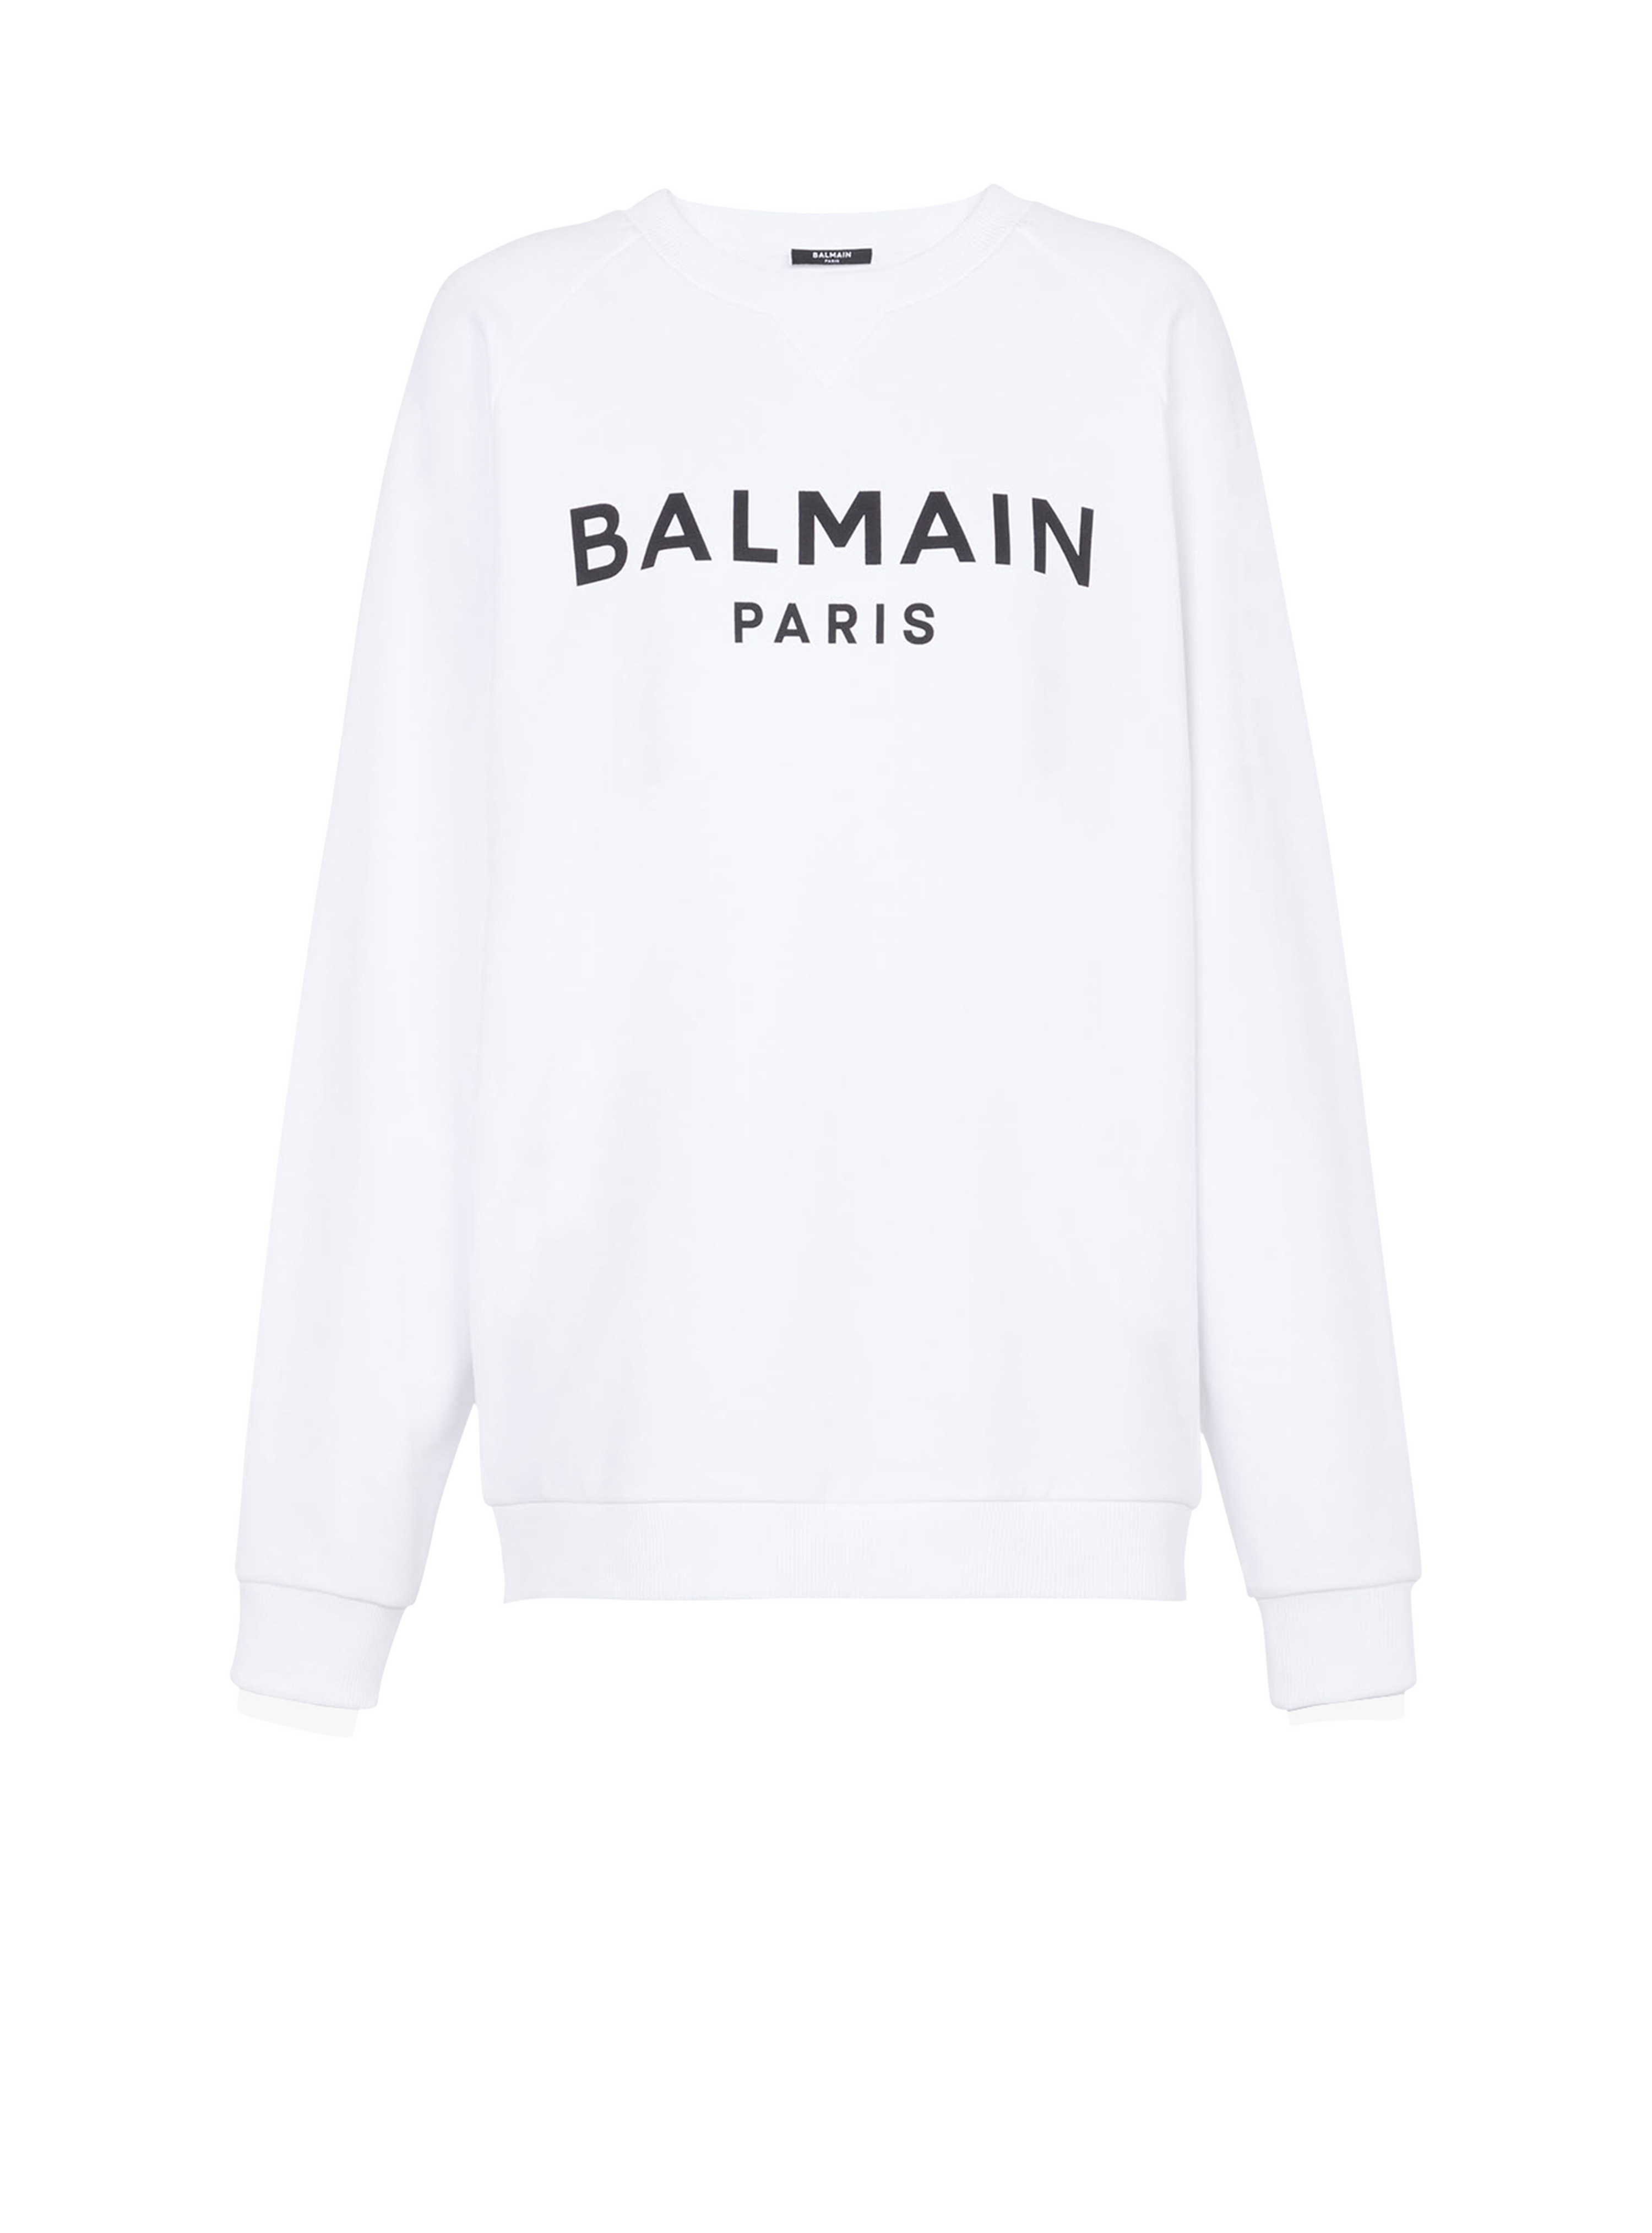 Sweat en coton avec logo imprimé Balmain, blanc